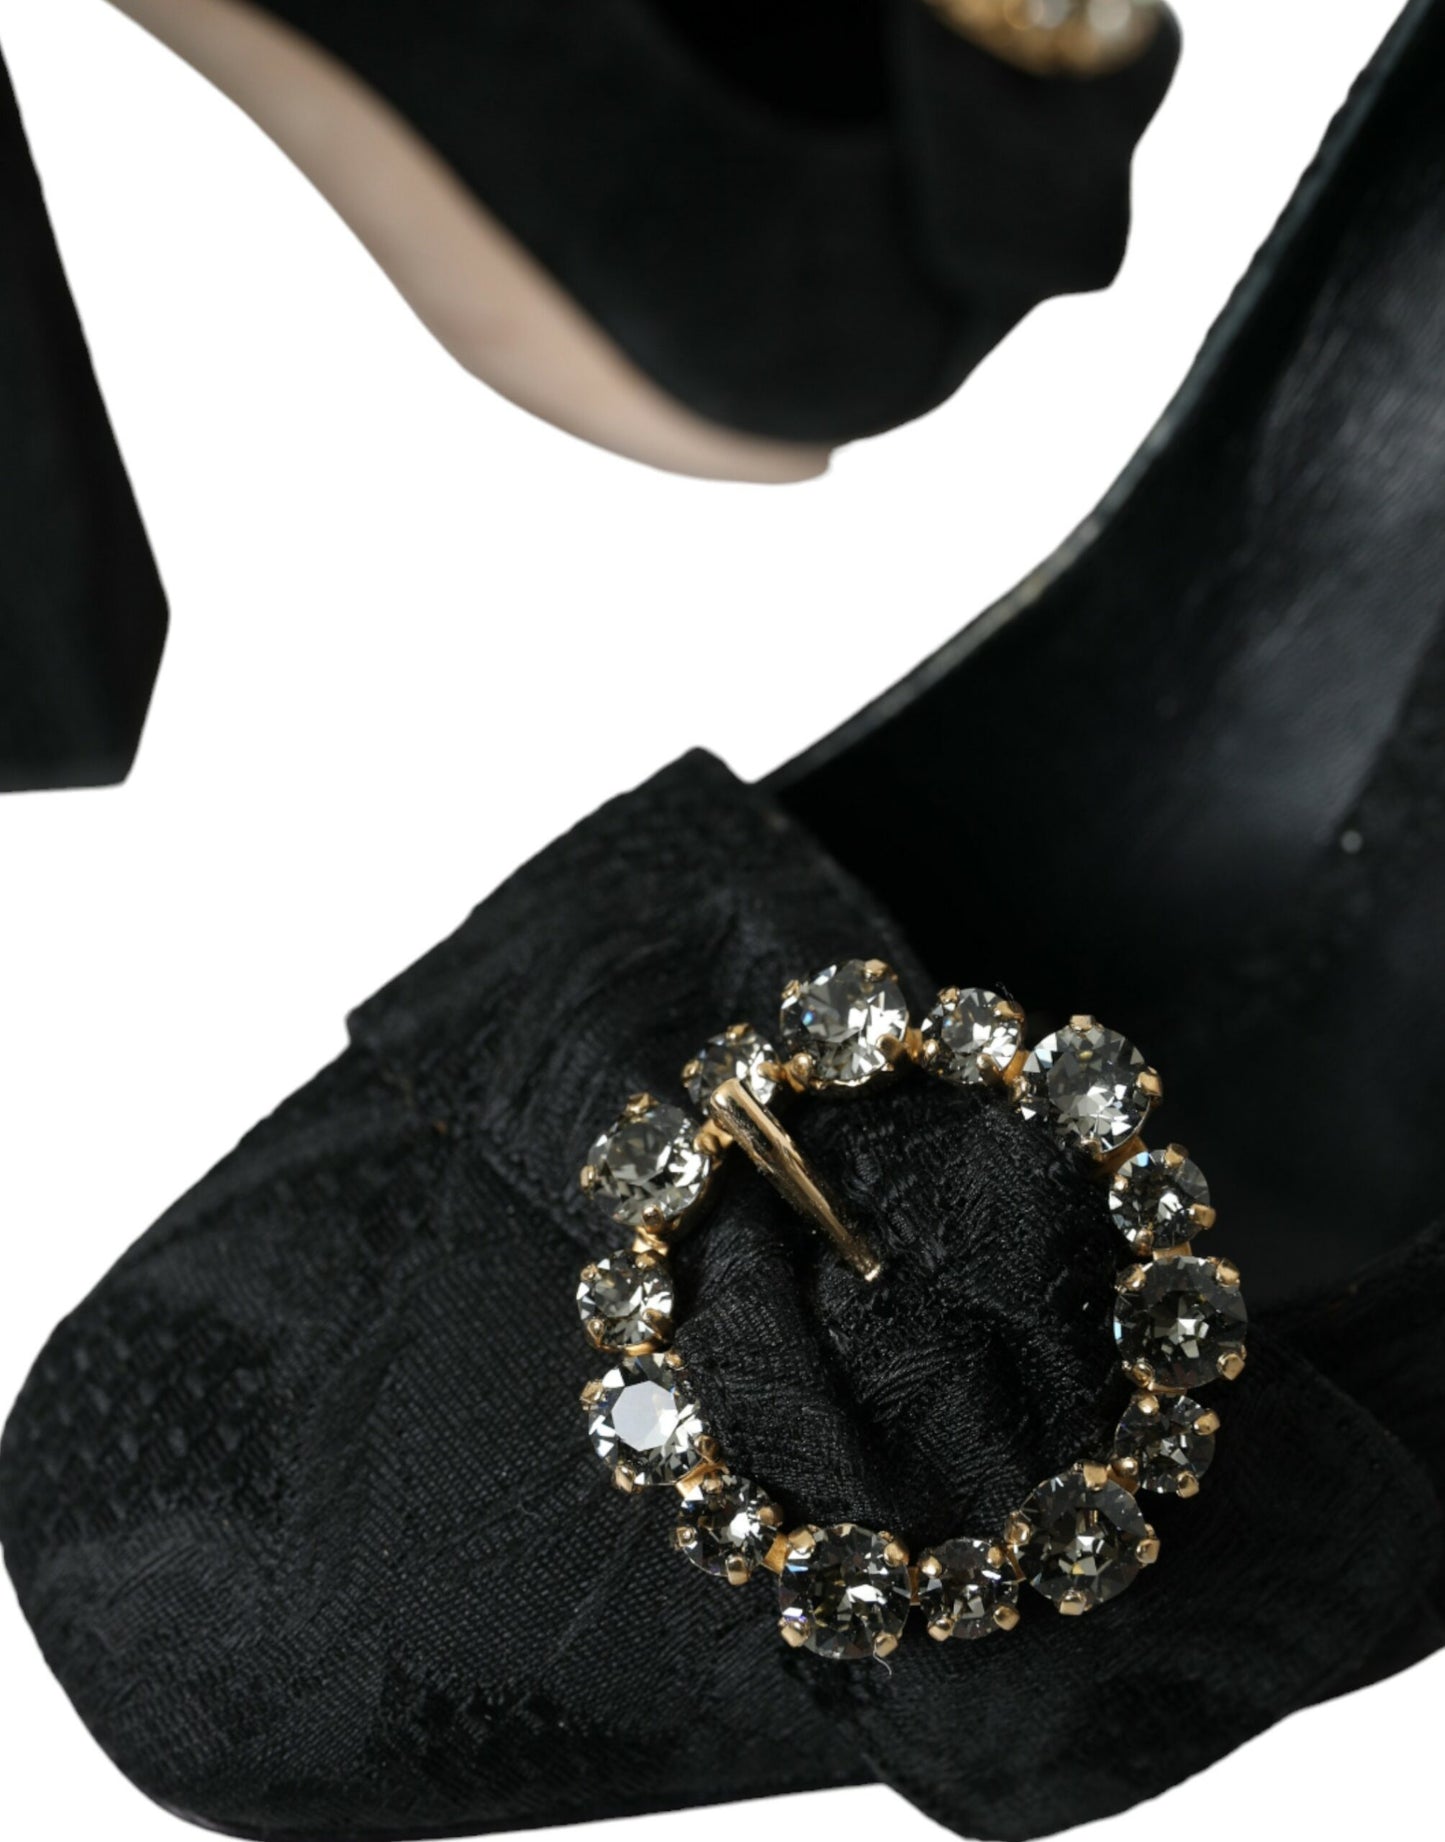 Dolce & Gabbana Black Brocade Crystals Heels Pumps Shoes